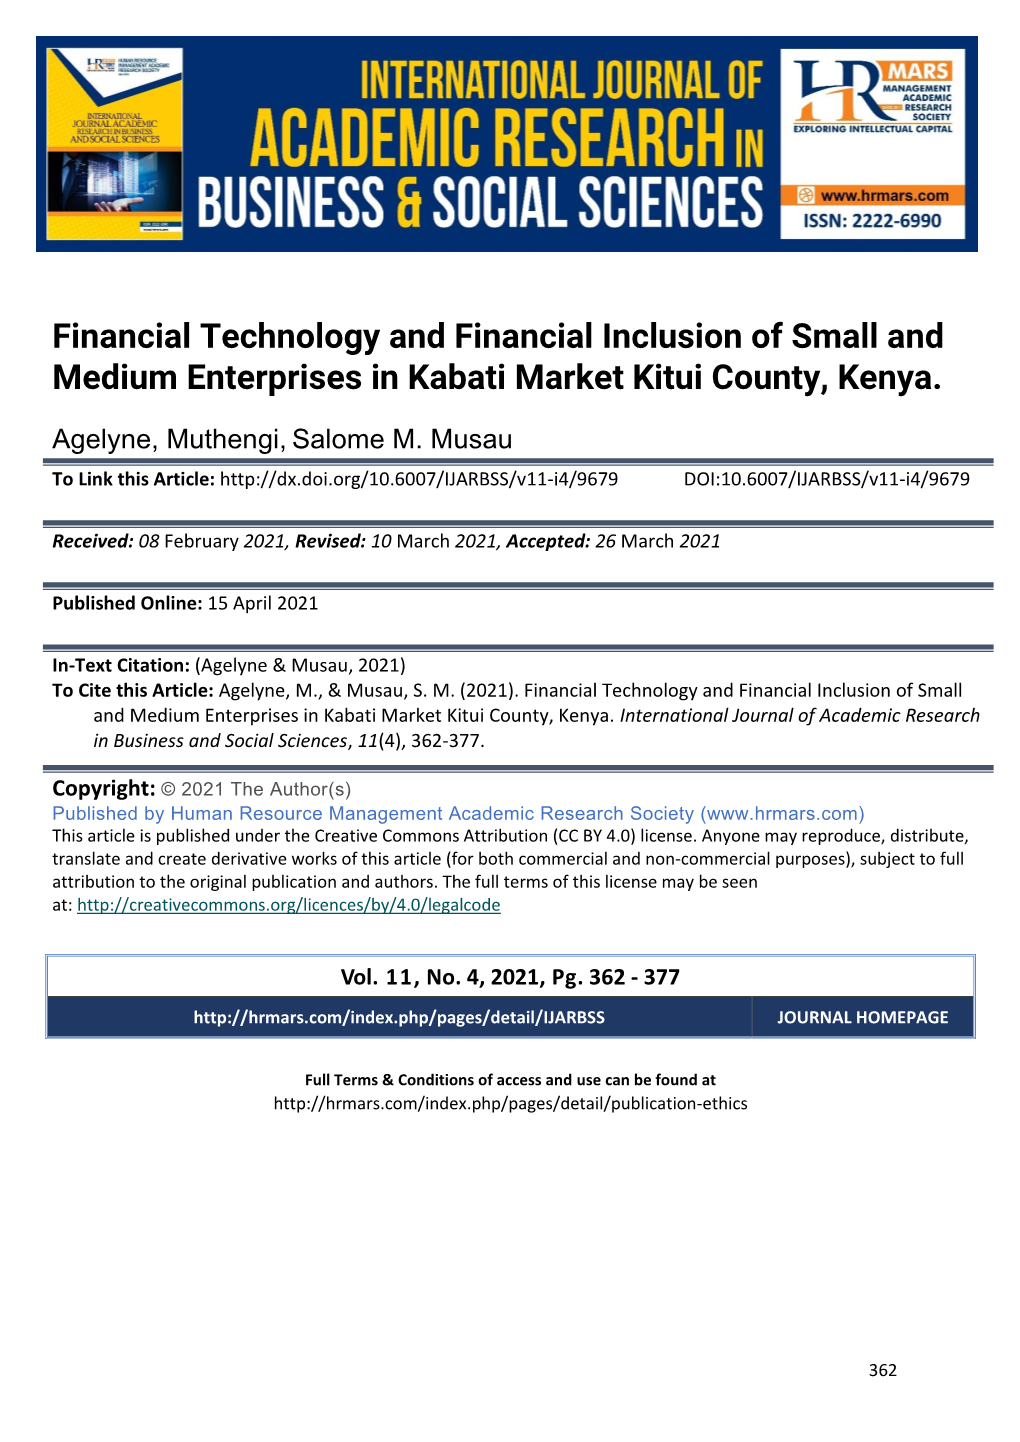 Financial Technology and Financial Inclusion of Small and Medium Enterprises in Kabati Market Kitui County, Kenya